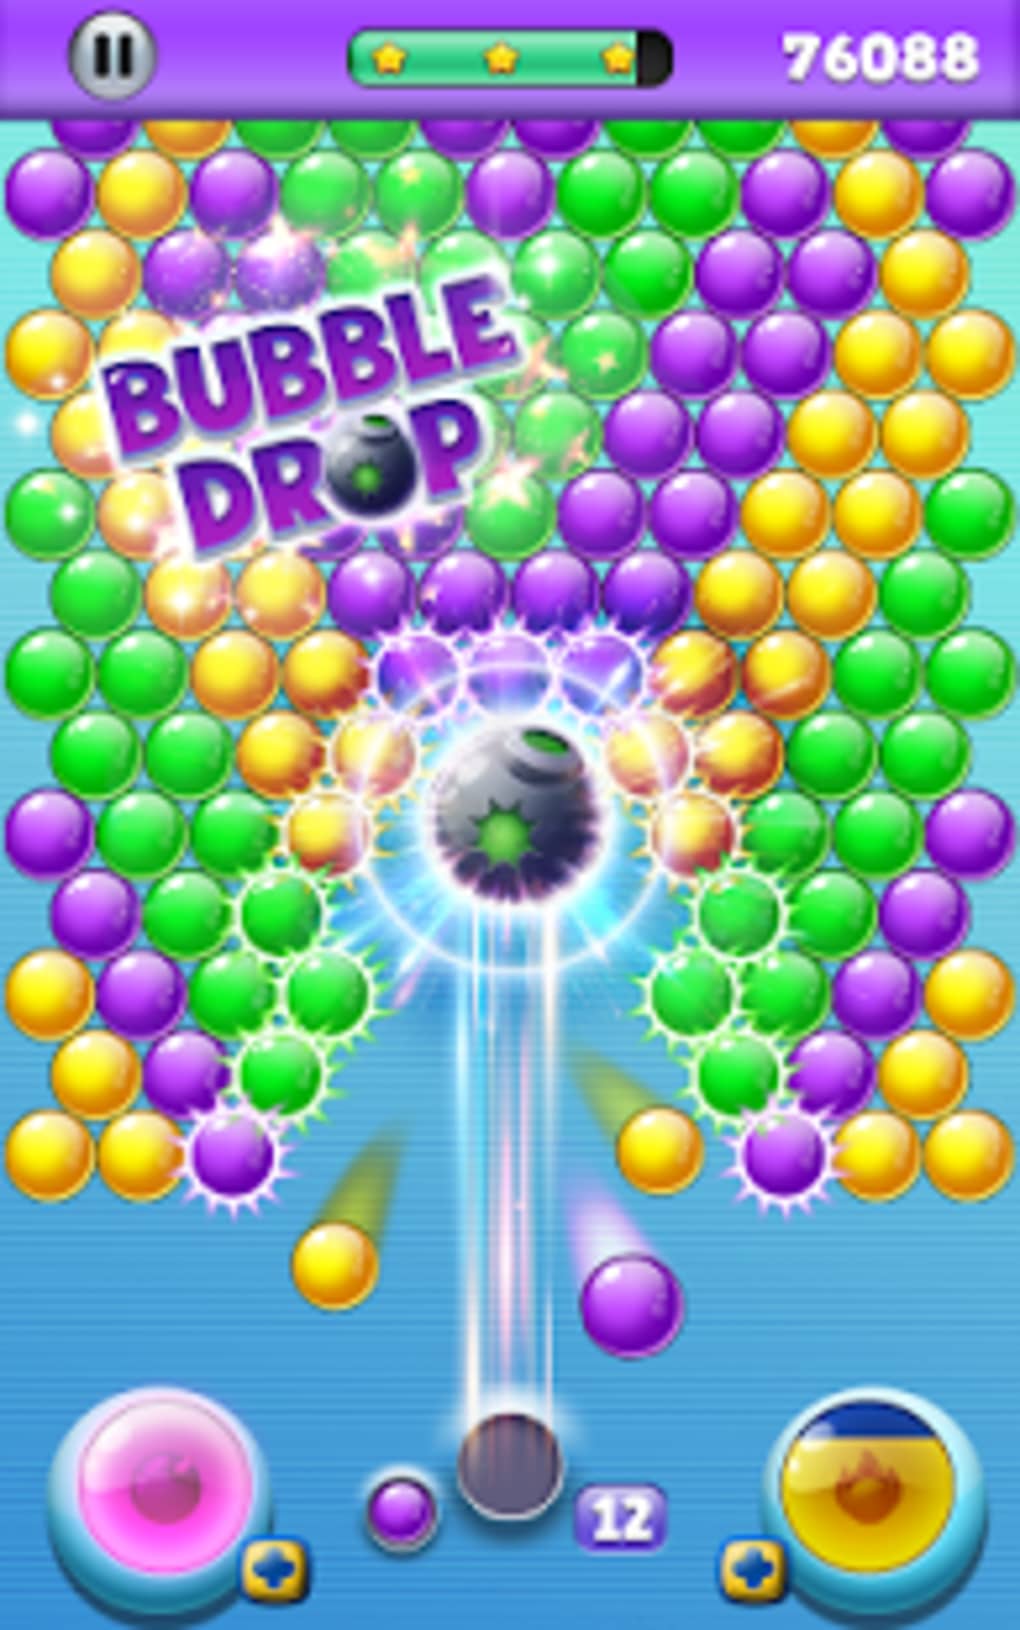 AE Bubble:Offline Bubble Games Free Download